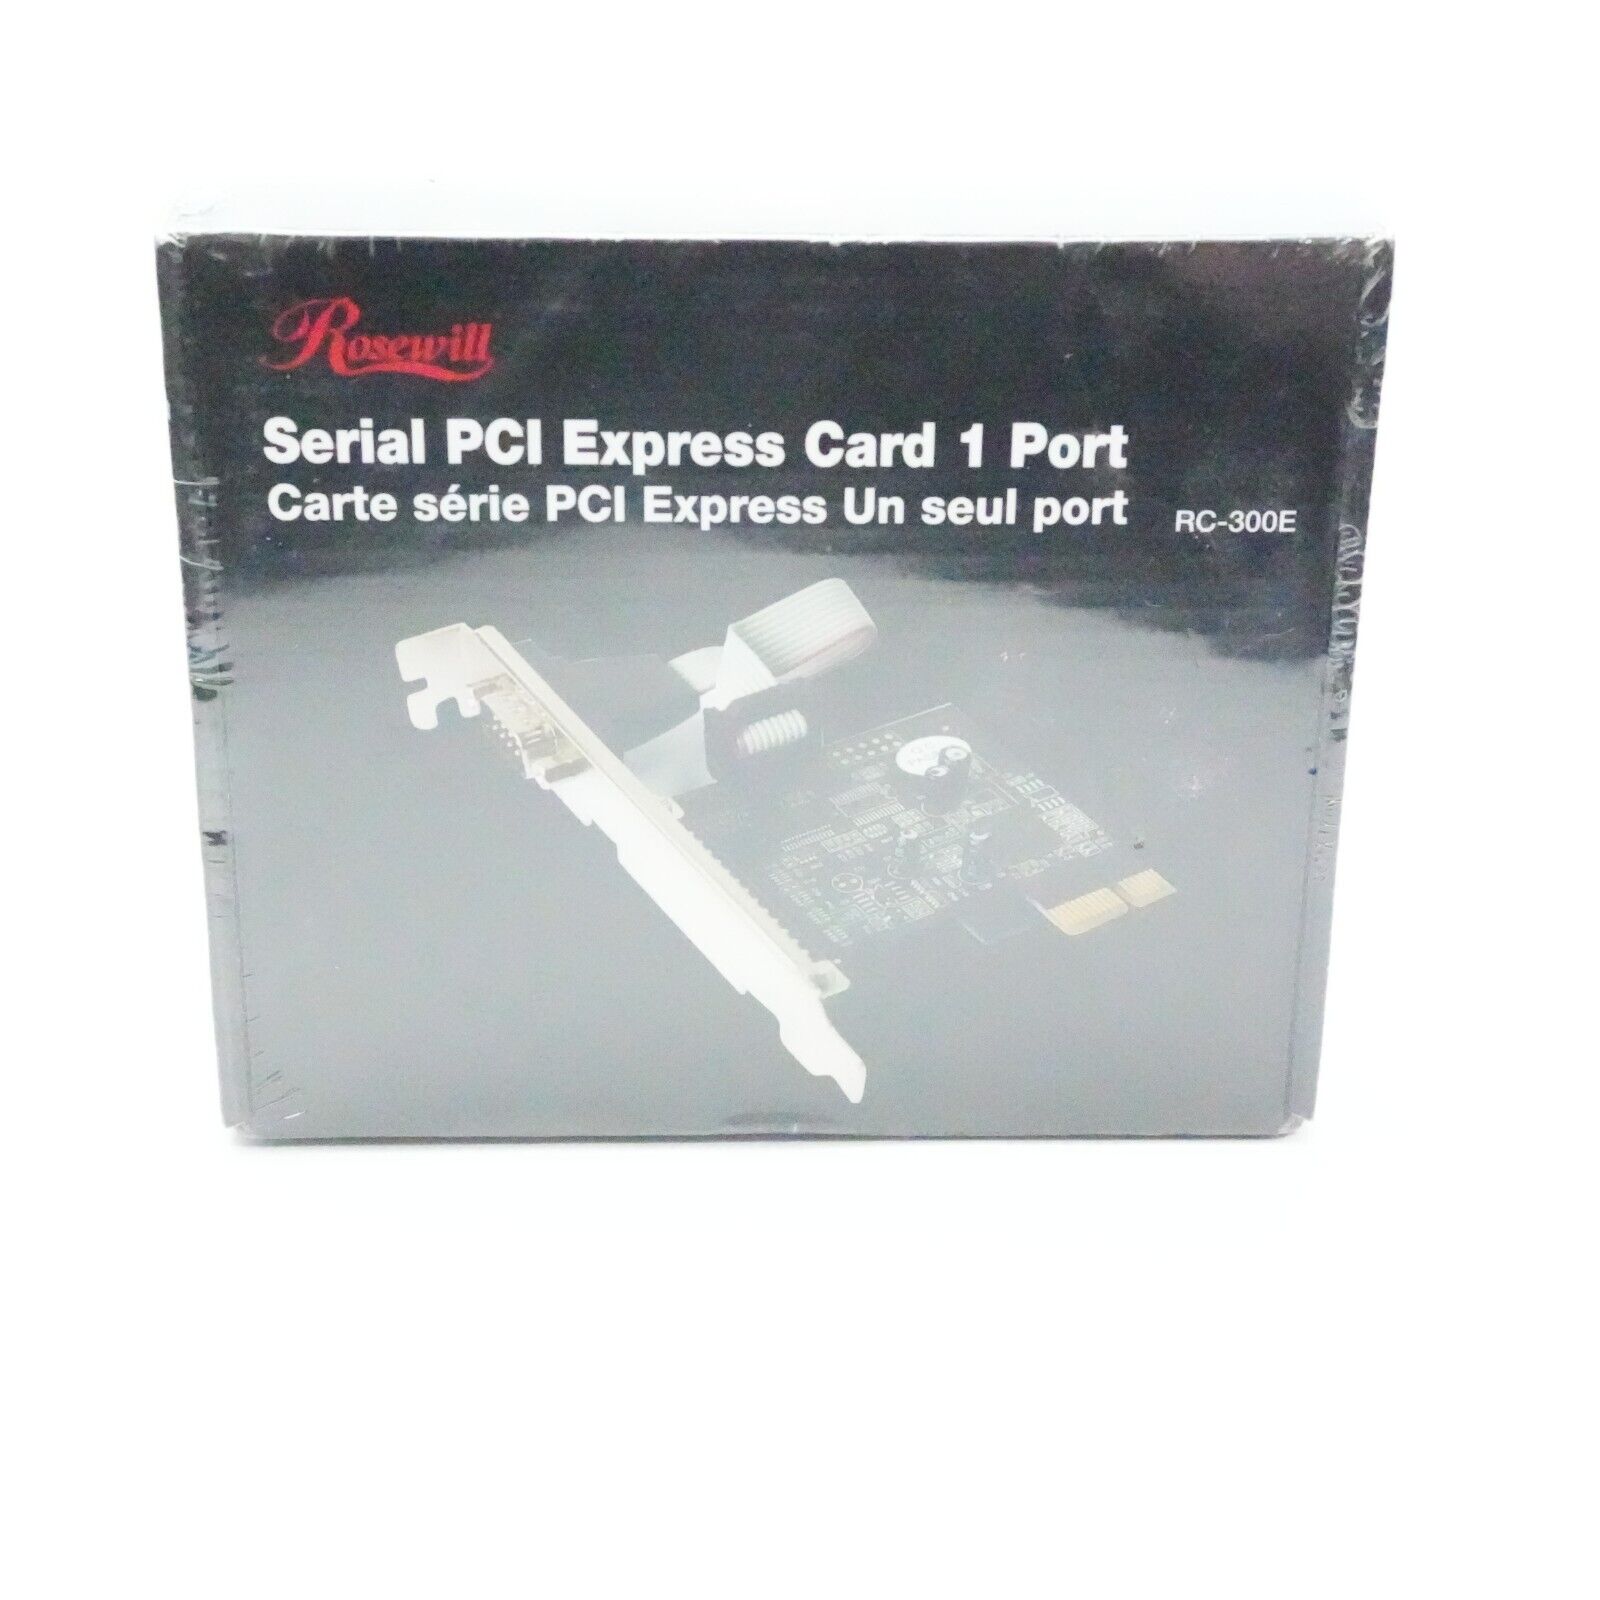 Rosewill Serial PCI Express Card 1 Port Model RC-300E 230400bit/s tran rate NIB